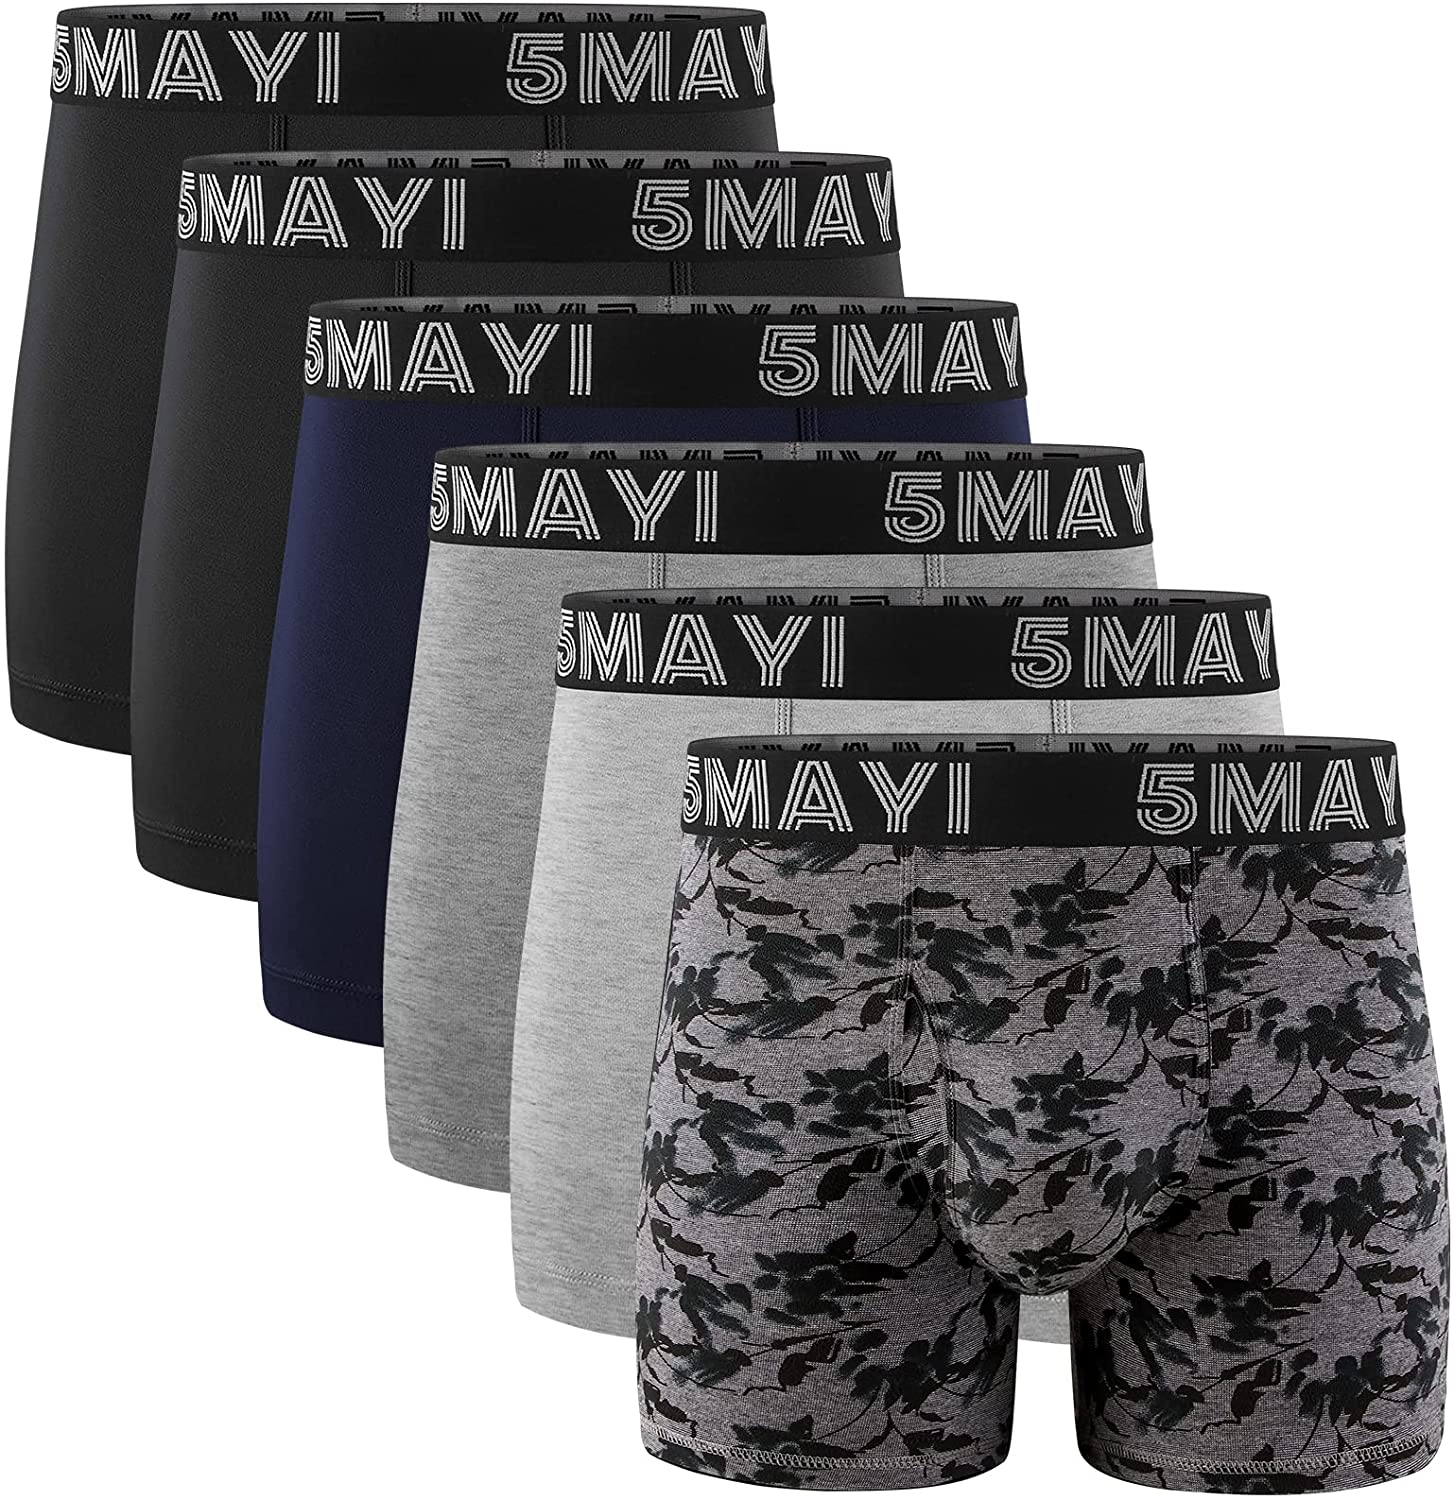 5Mayi Mens Cotton Underwear Underwear S M L XL XXL, A: Black